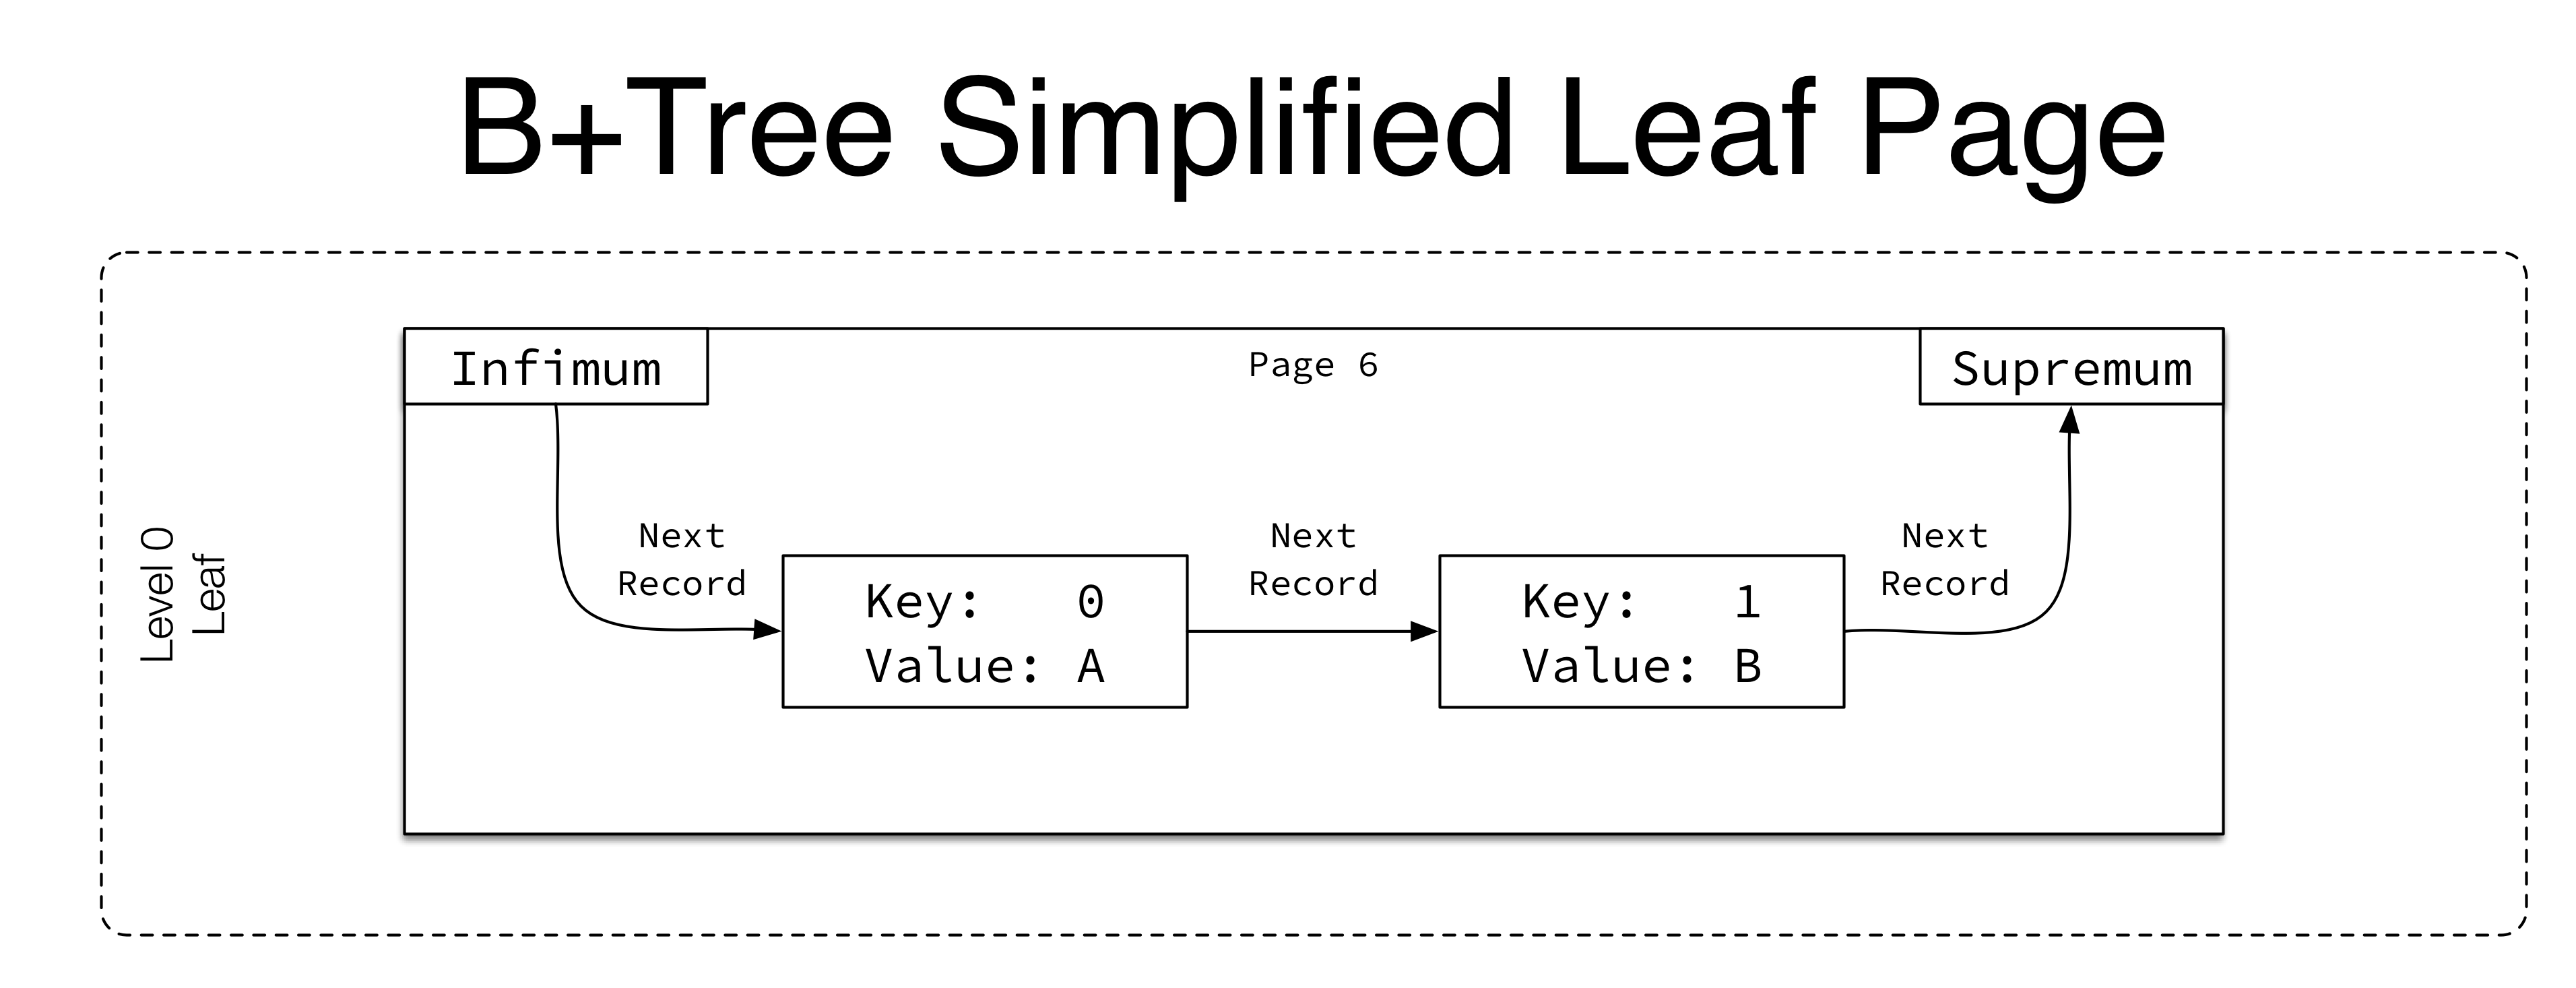 B+Tree Simplified Leaf Page